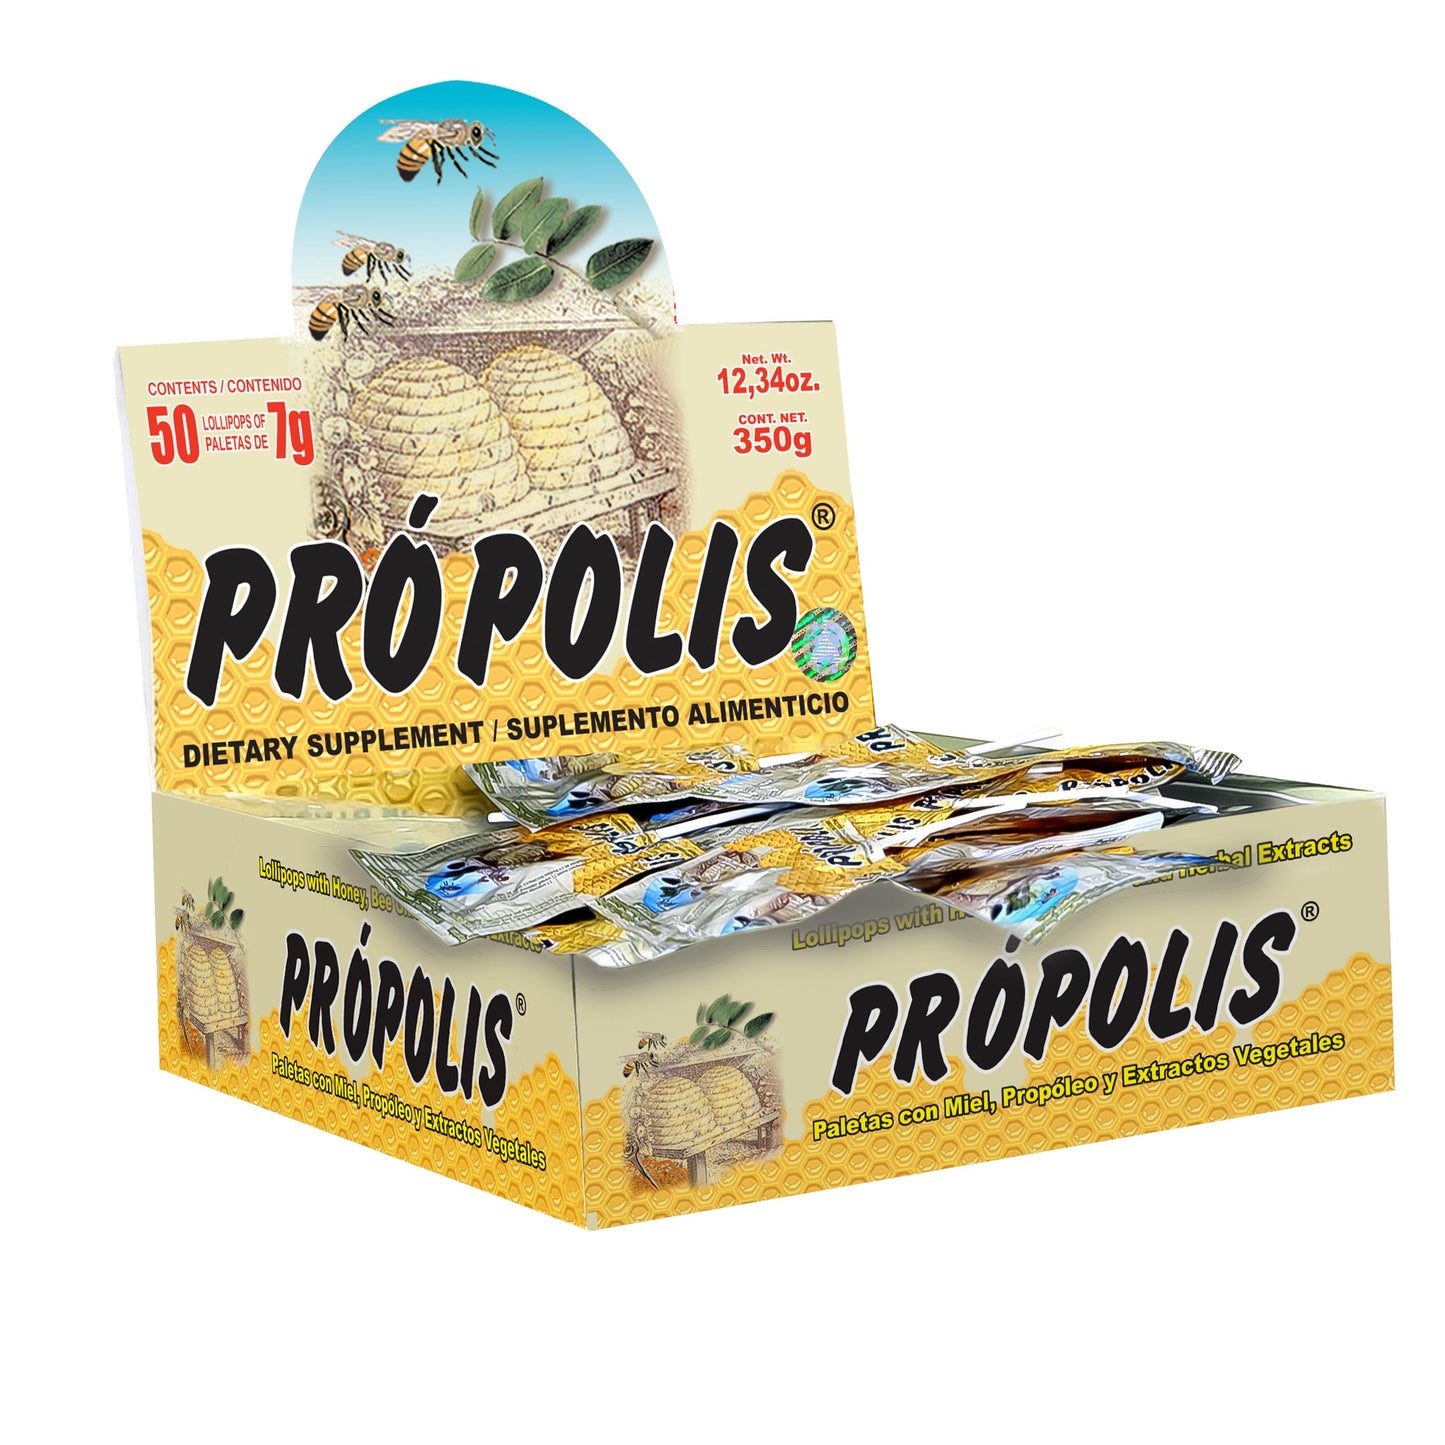 PROPOLIS ® 50 paletas